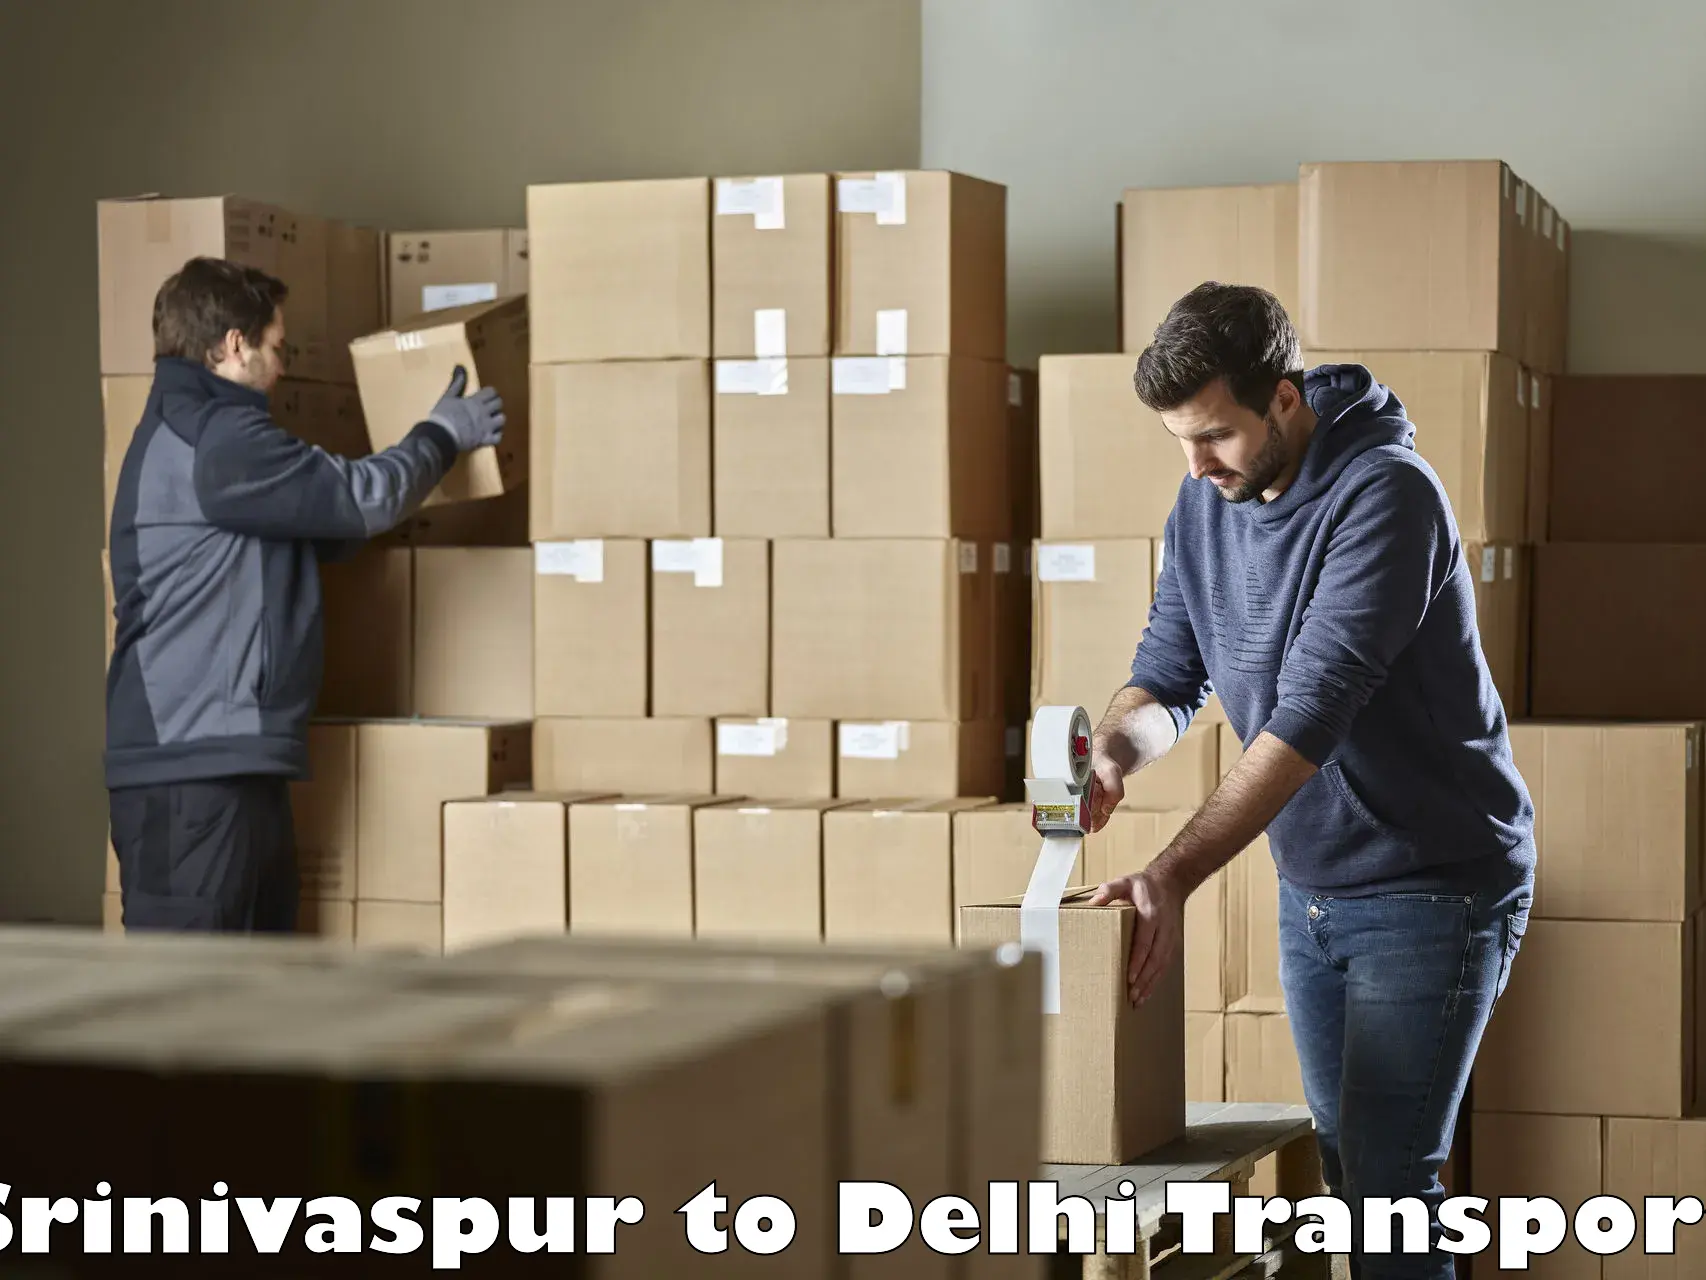 Daily transport service Srinivaspur to Ashok Vihar